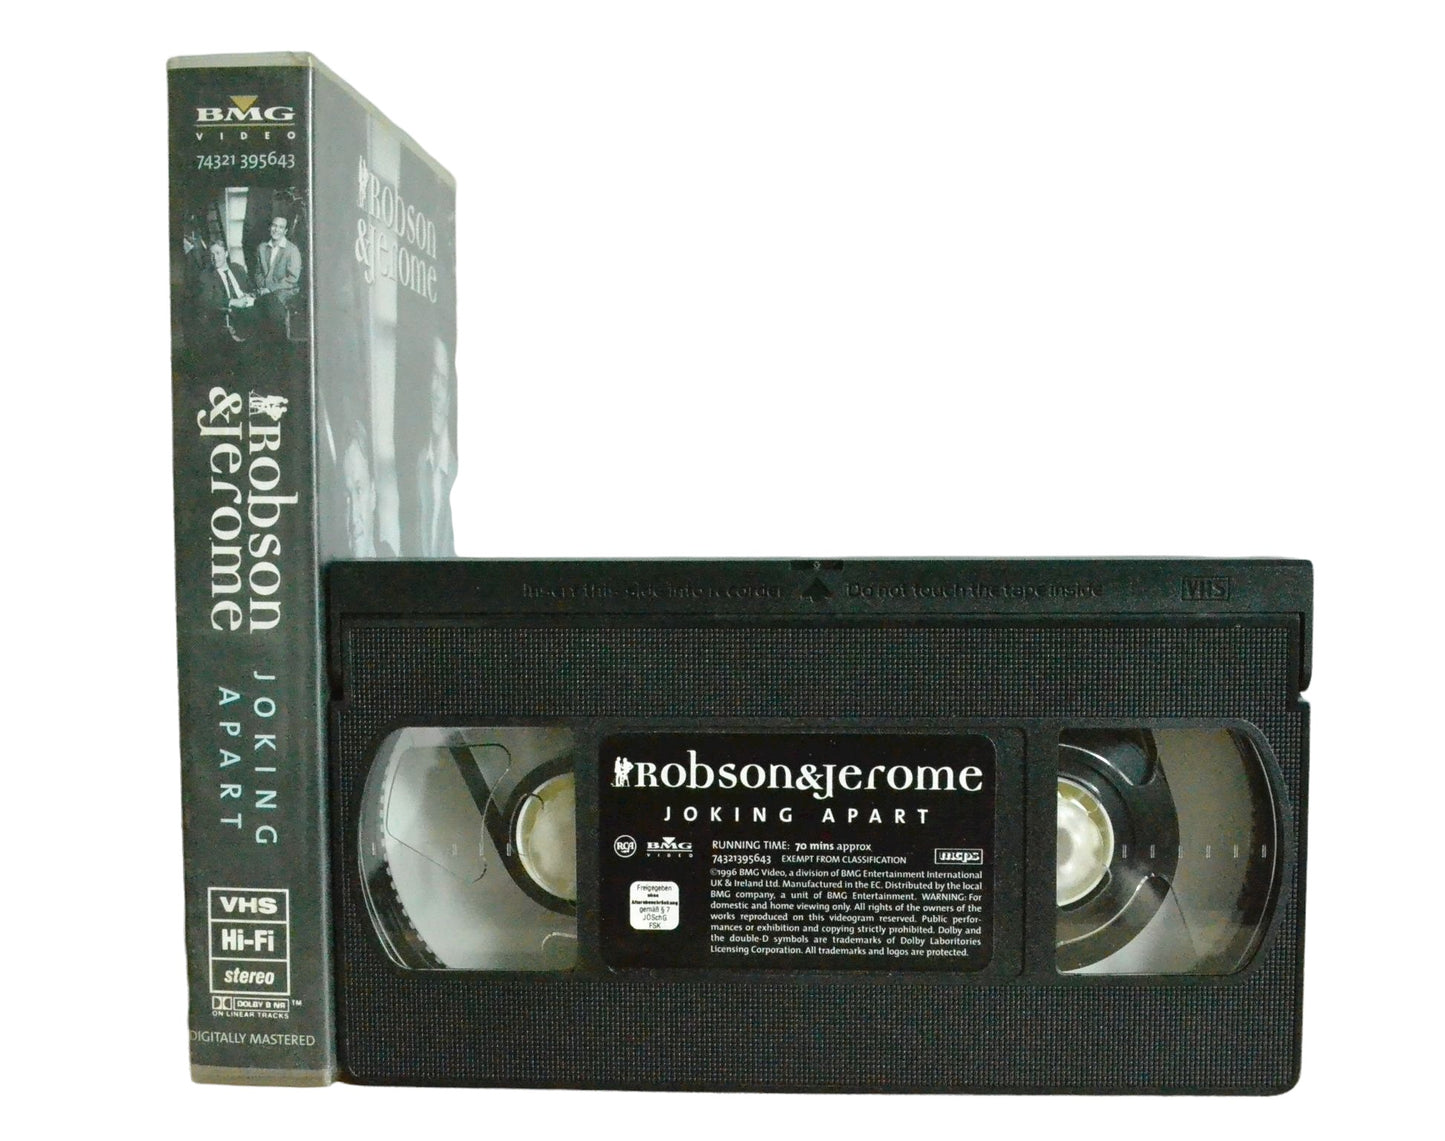 Robson & Jerome - Joking Apart - Robson Green - BMG Video - Music - Pal VHS-